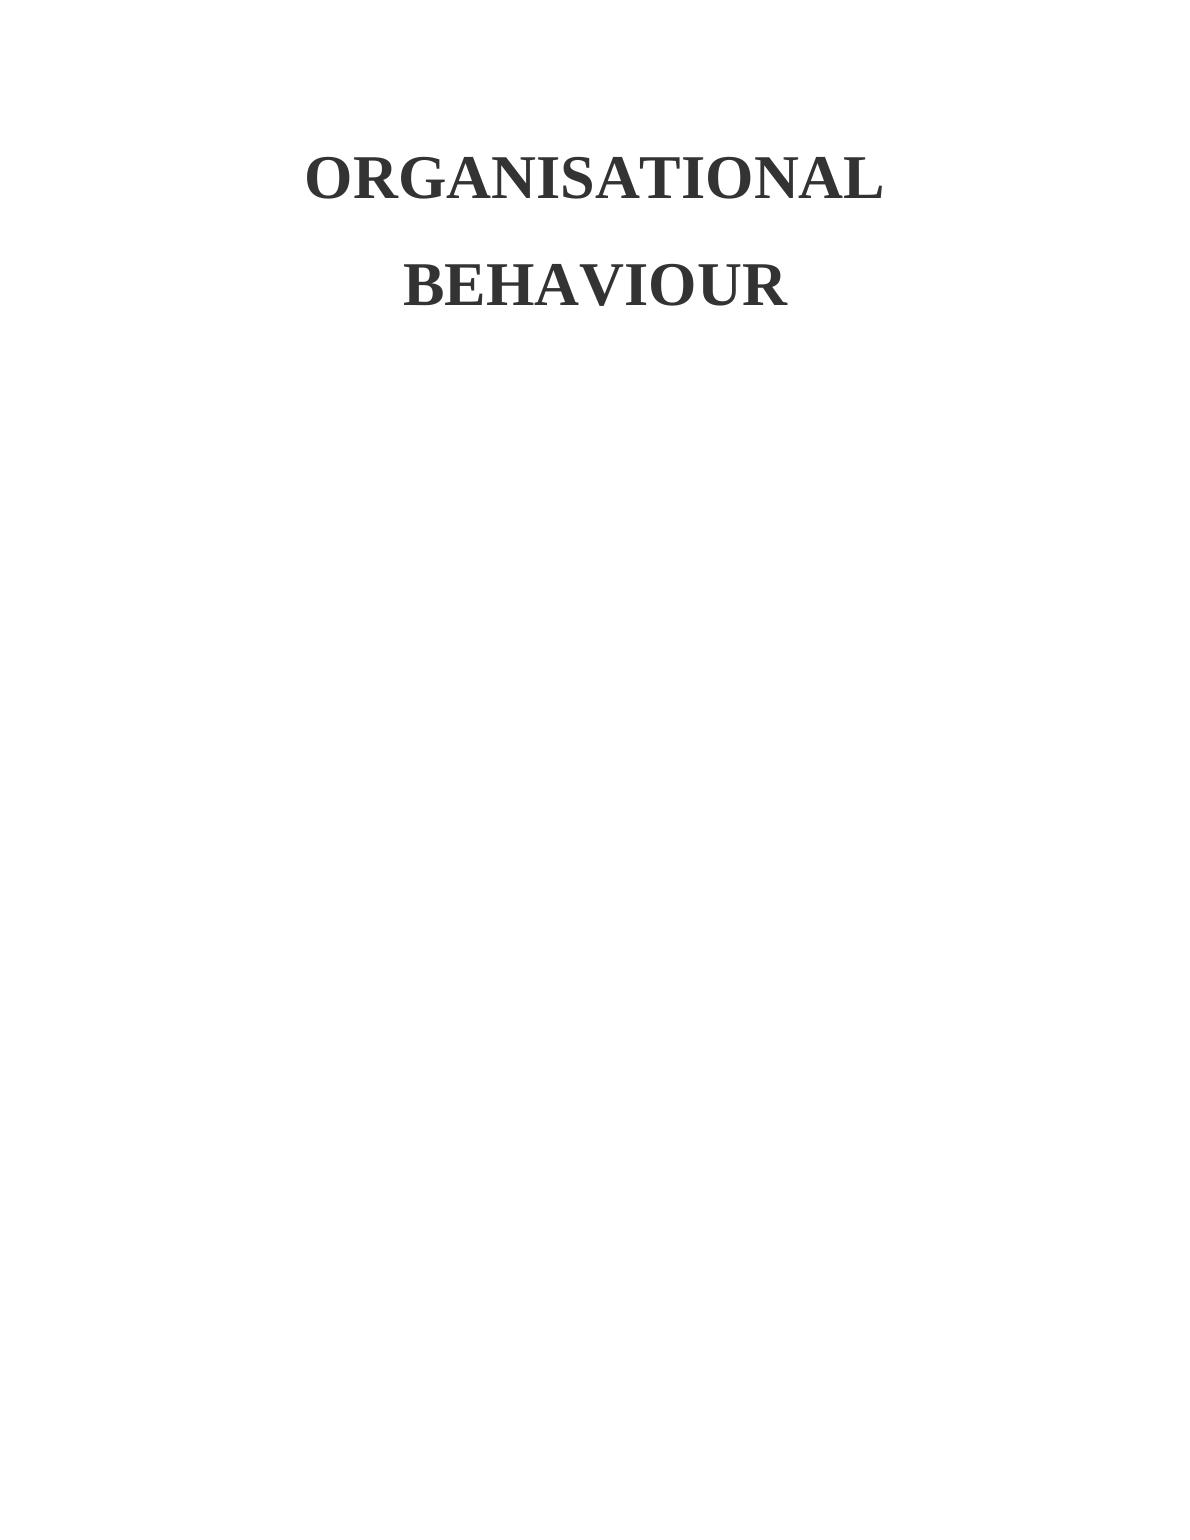 Organisational Behaviour Concept_1